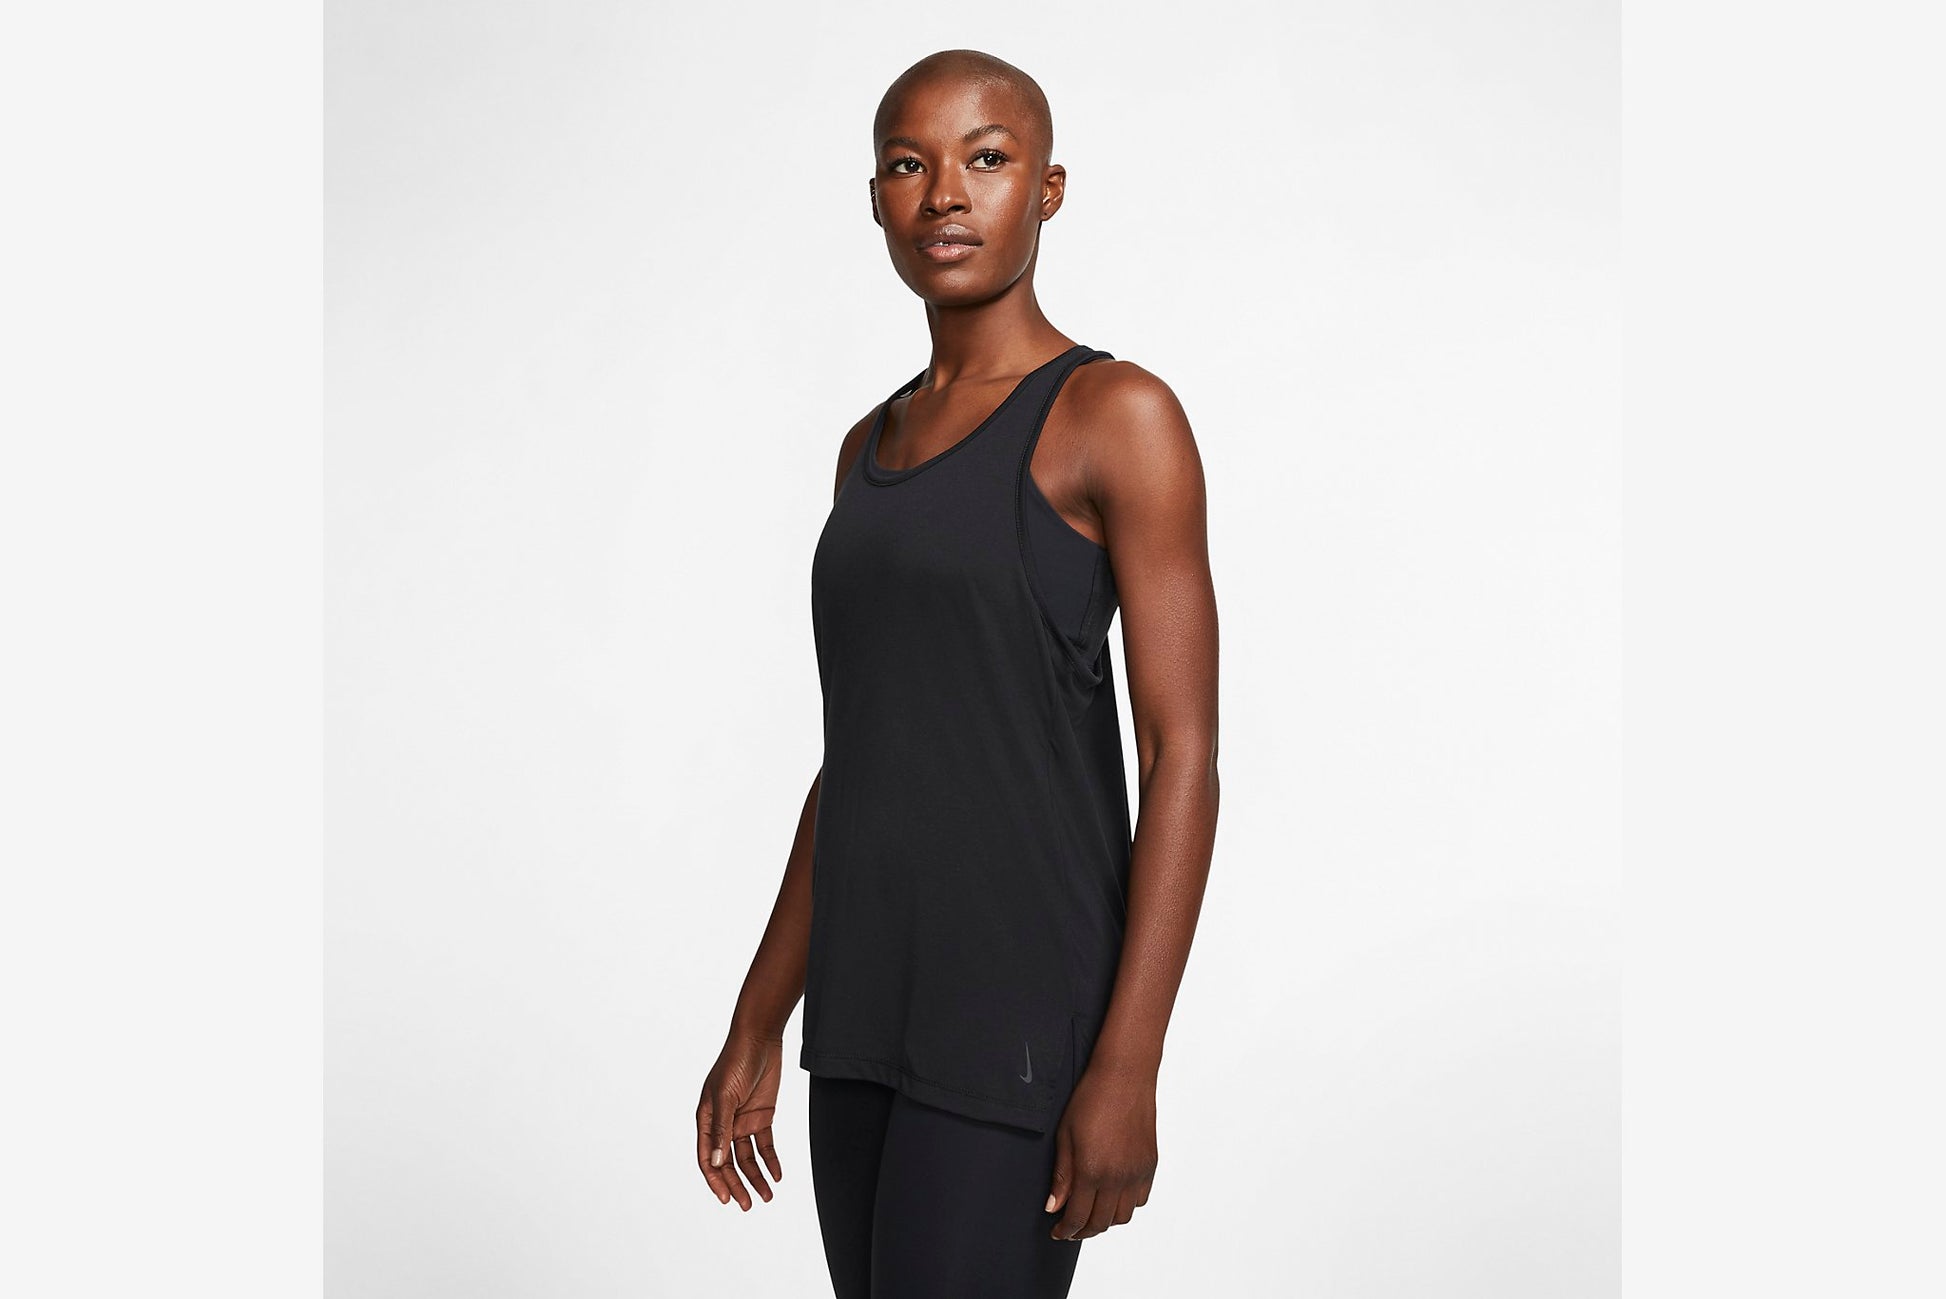 Nike Yoga Alate Versa Sports Bra W - Black / Iron Grey – Manor.